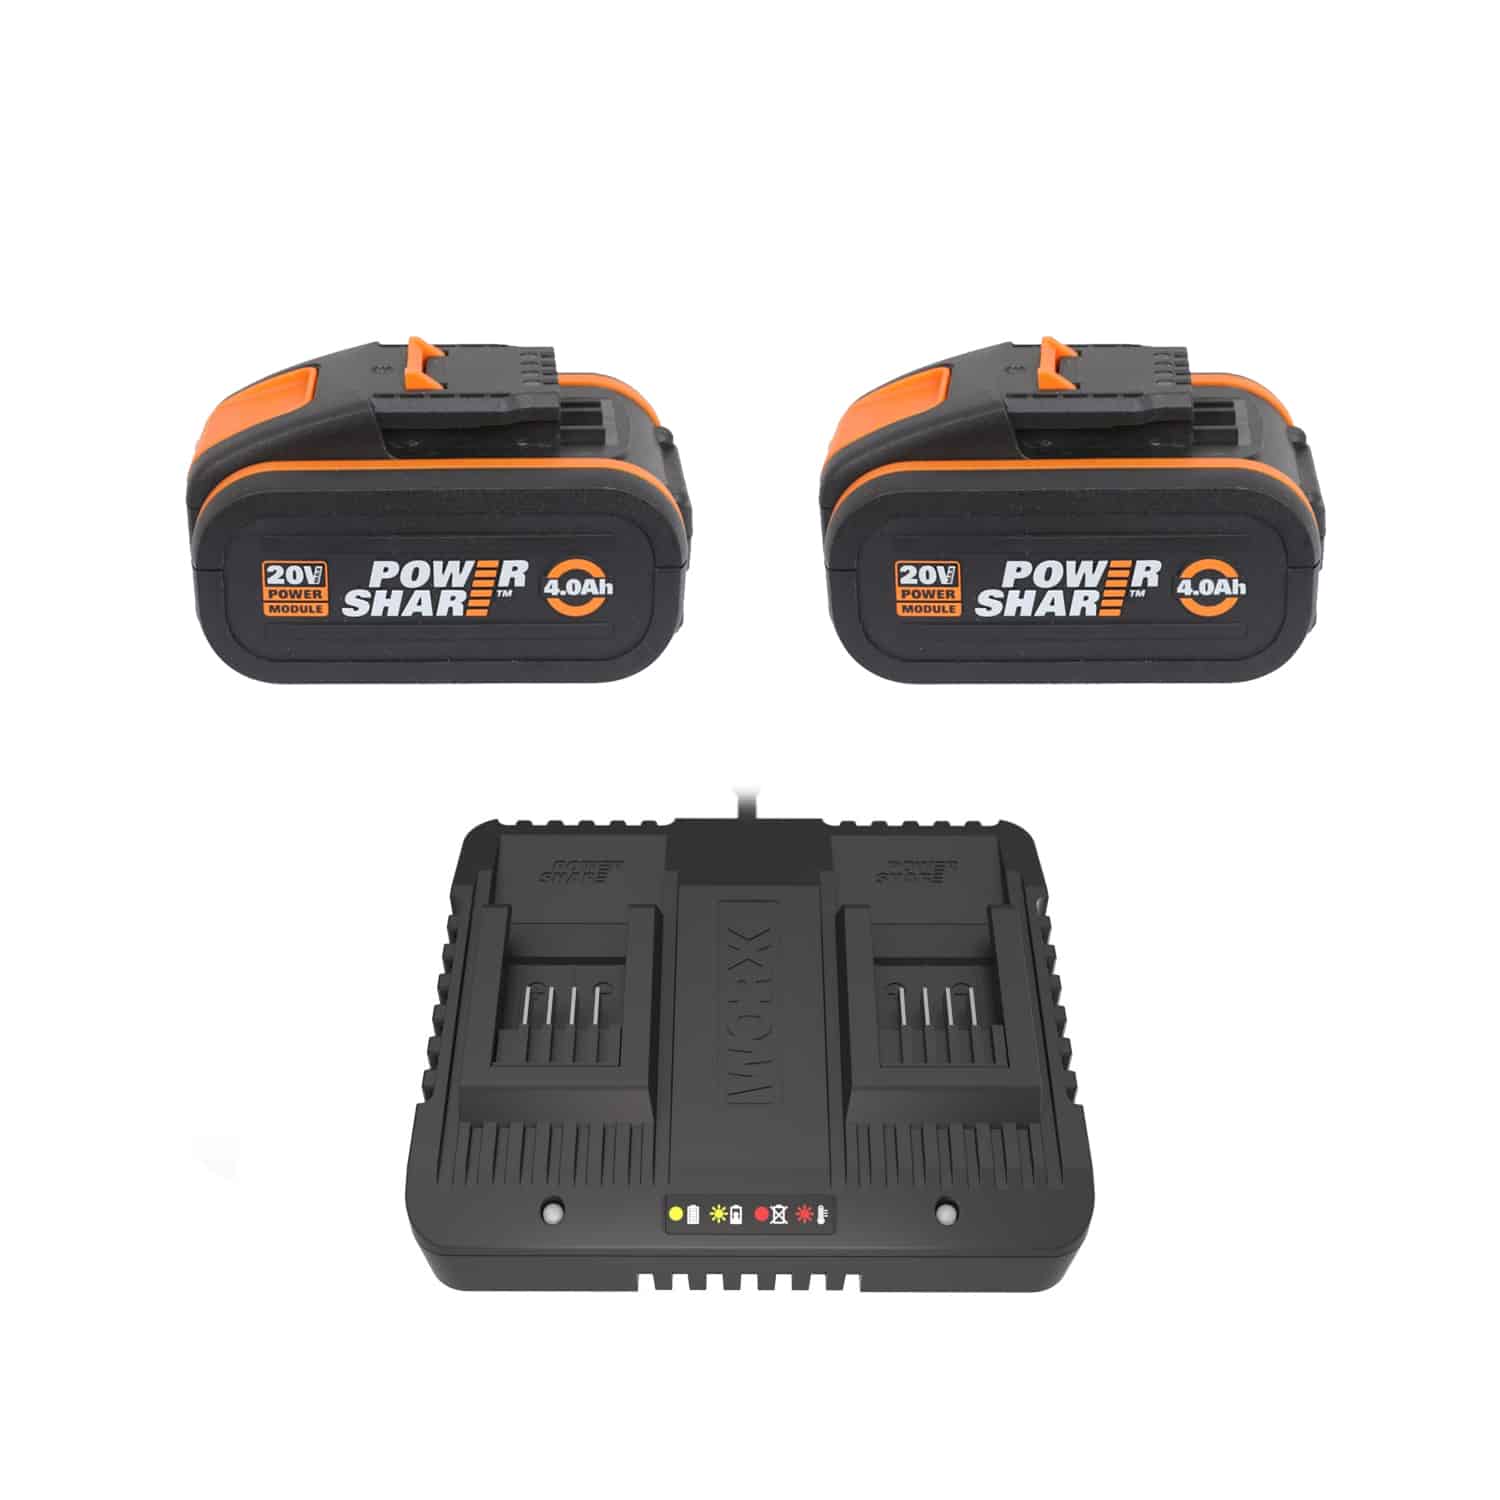 2x WORX 20V POWERSHARE™ 4.0Ah MAX Lithium-ion Batteries w/ 4A Dual Charger  – WA3553.B3 • Robot Lawn Mowers Australia